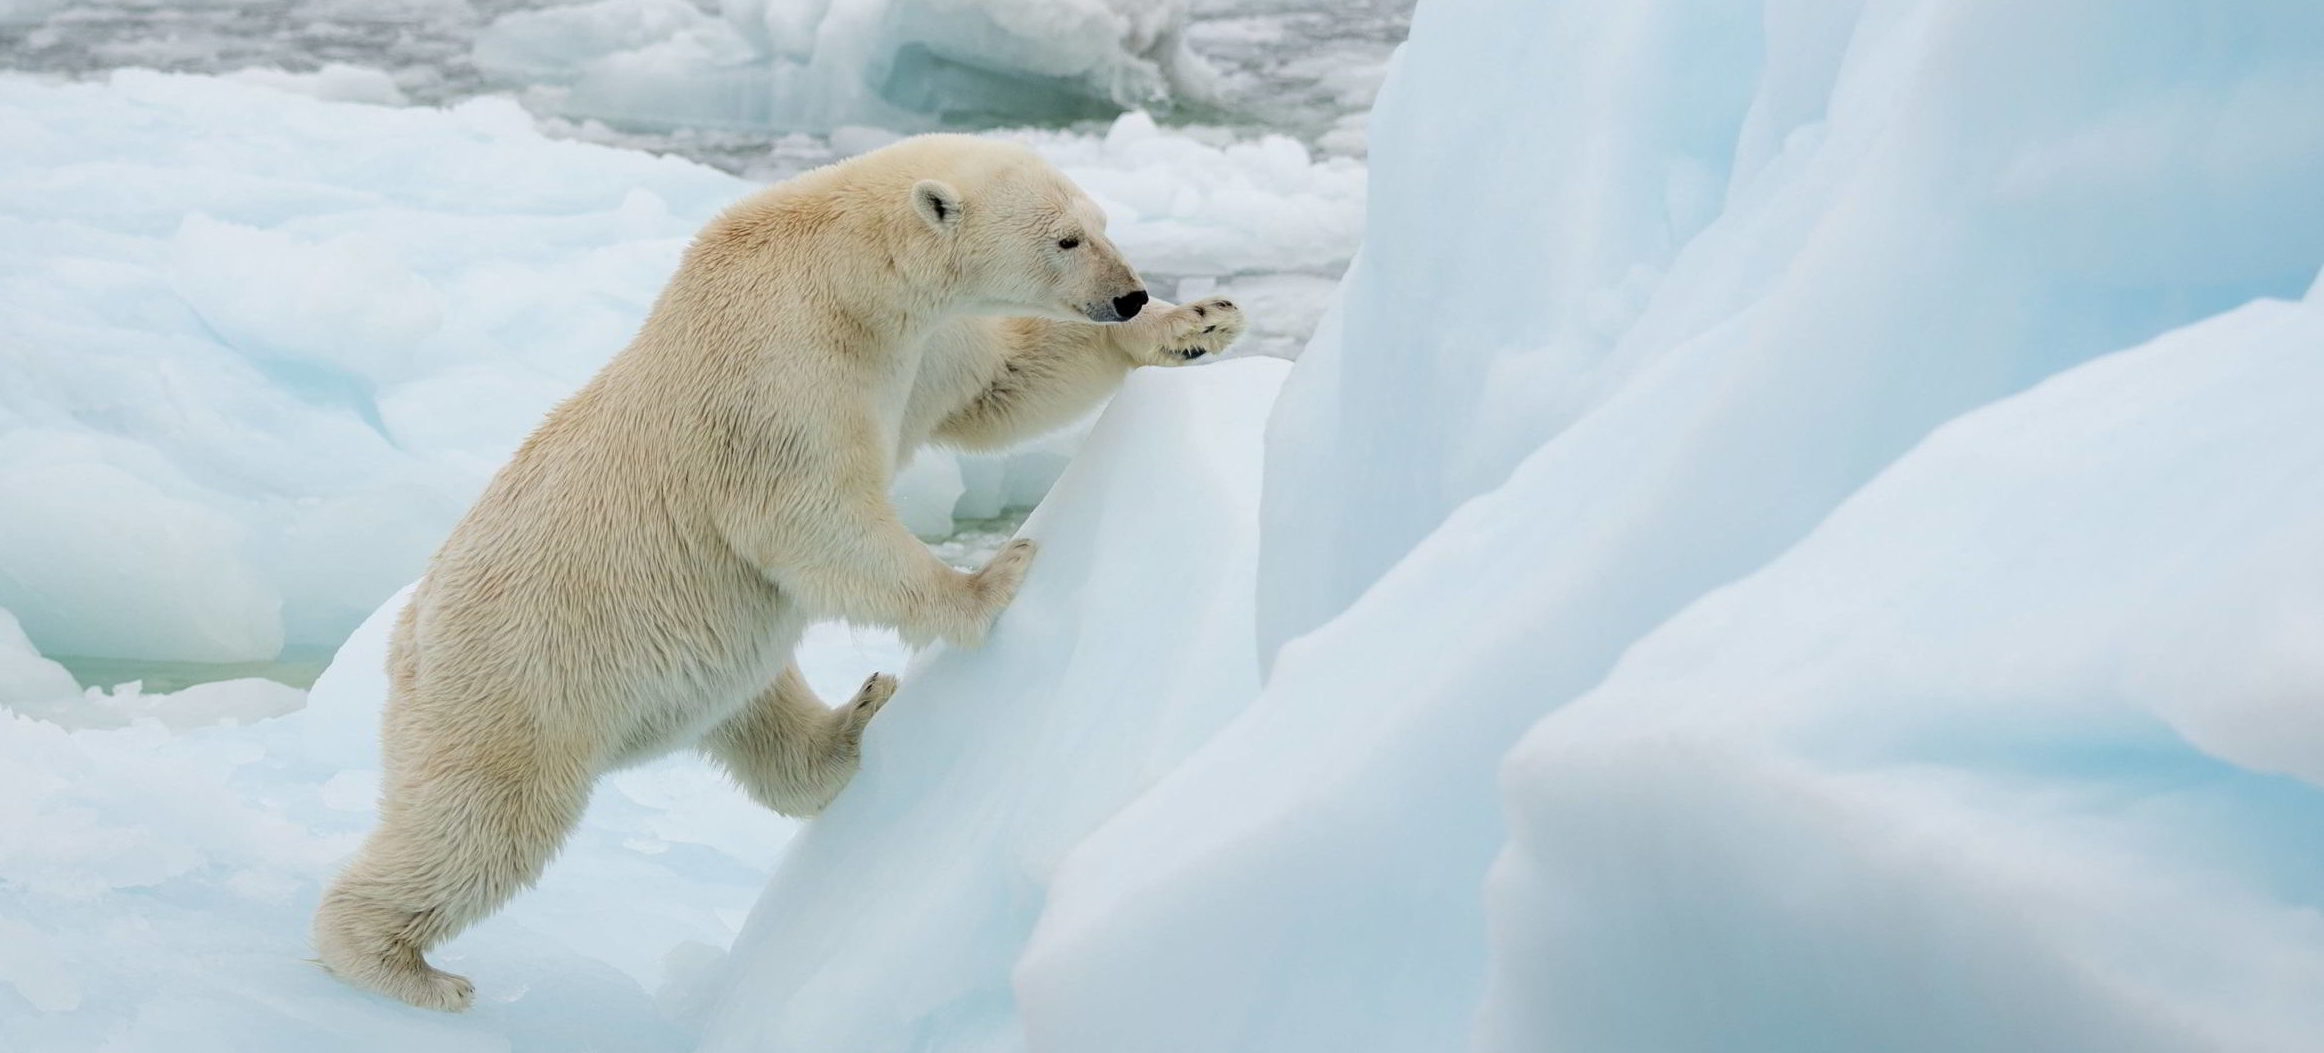 Polar bear climbing on ice